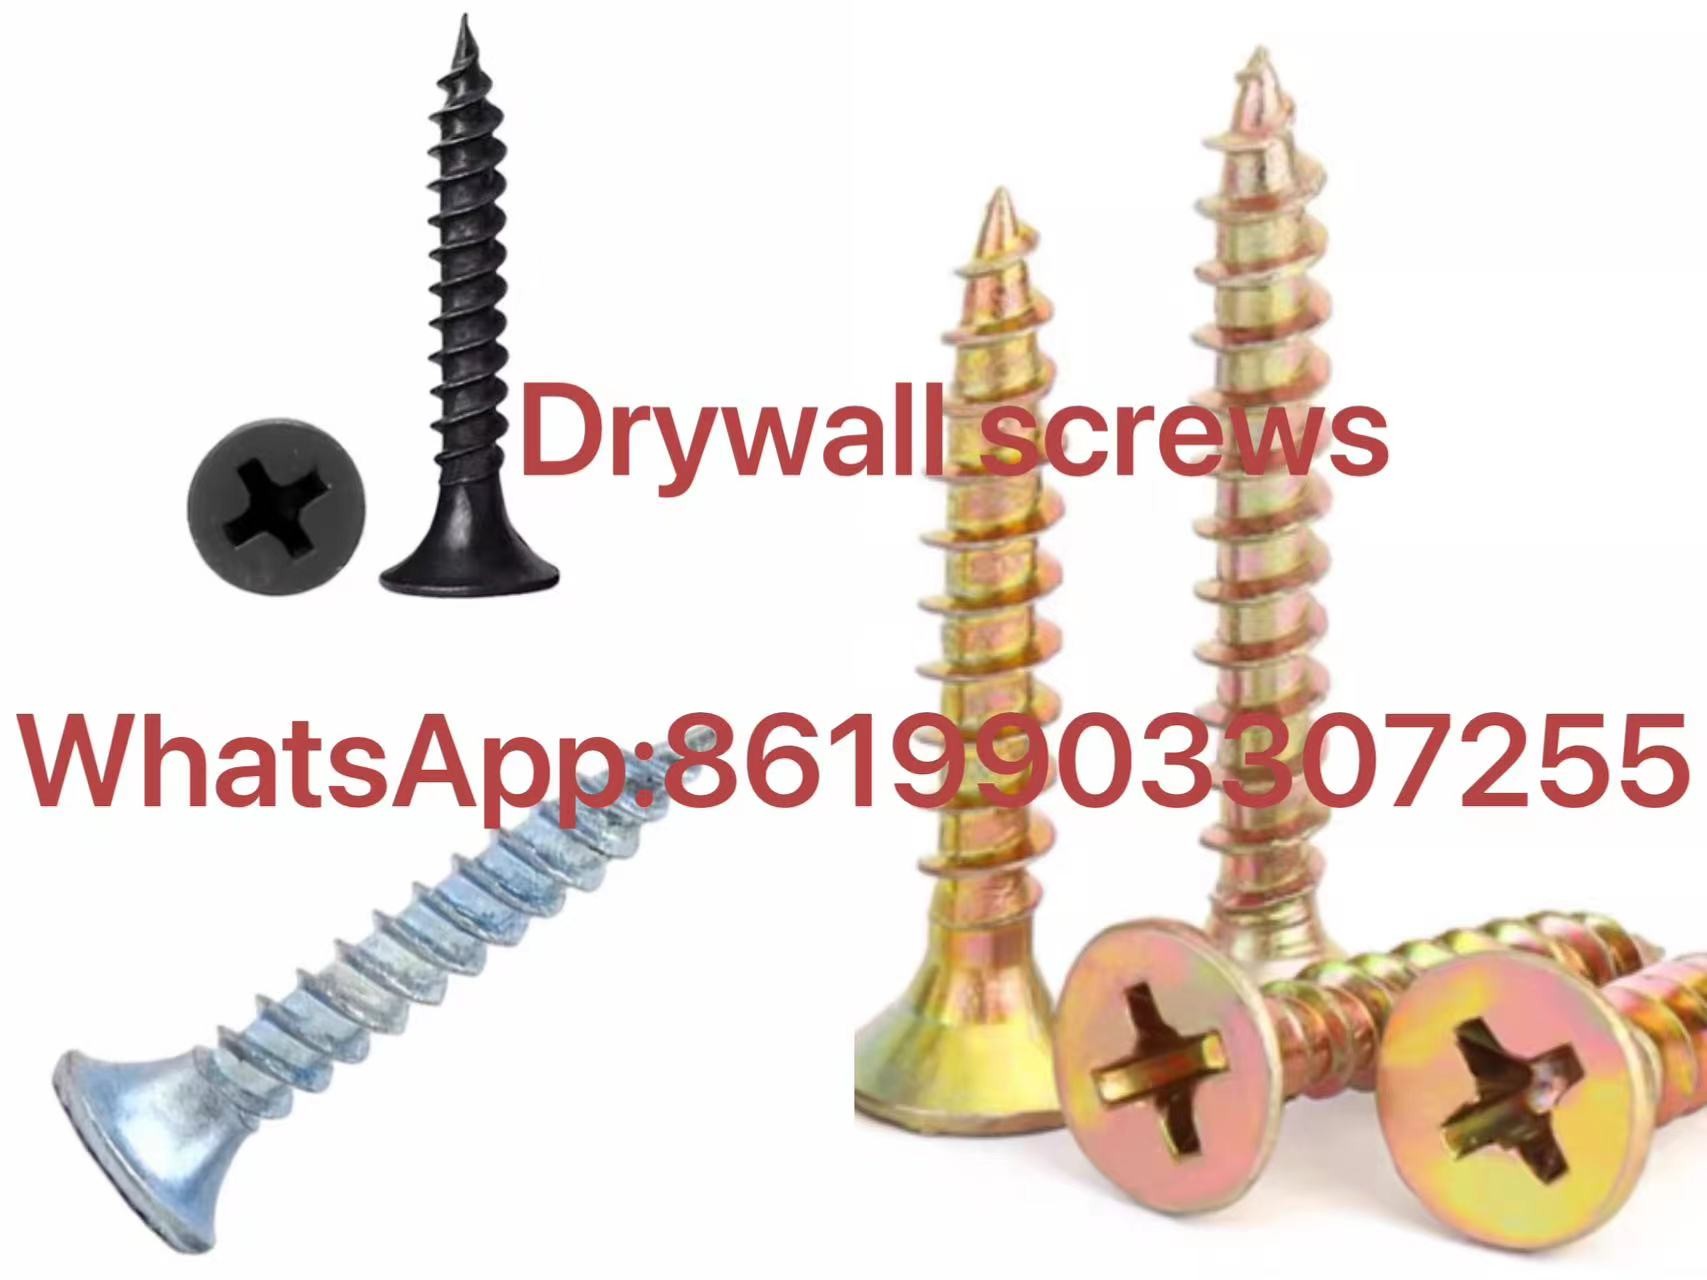 manufacturer’s drywall screws WhatsApp:8619903307255-image